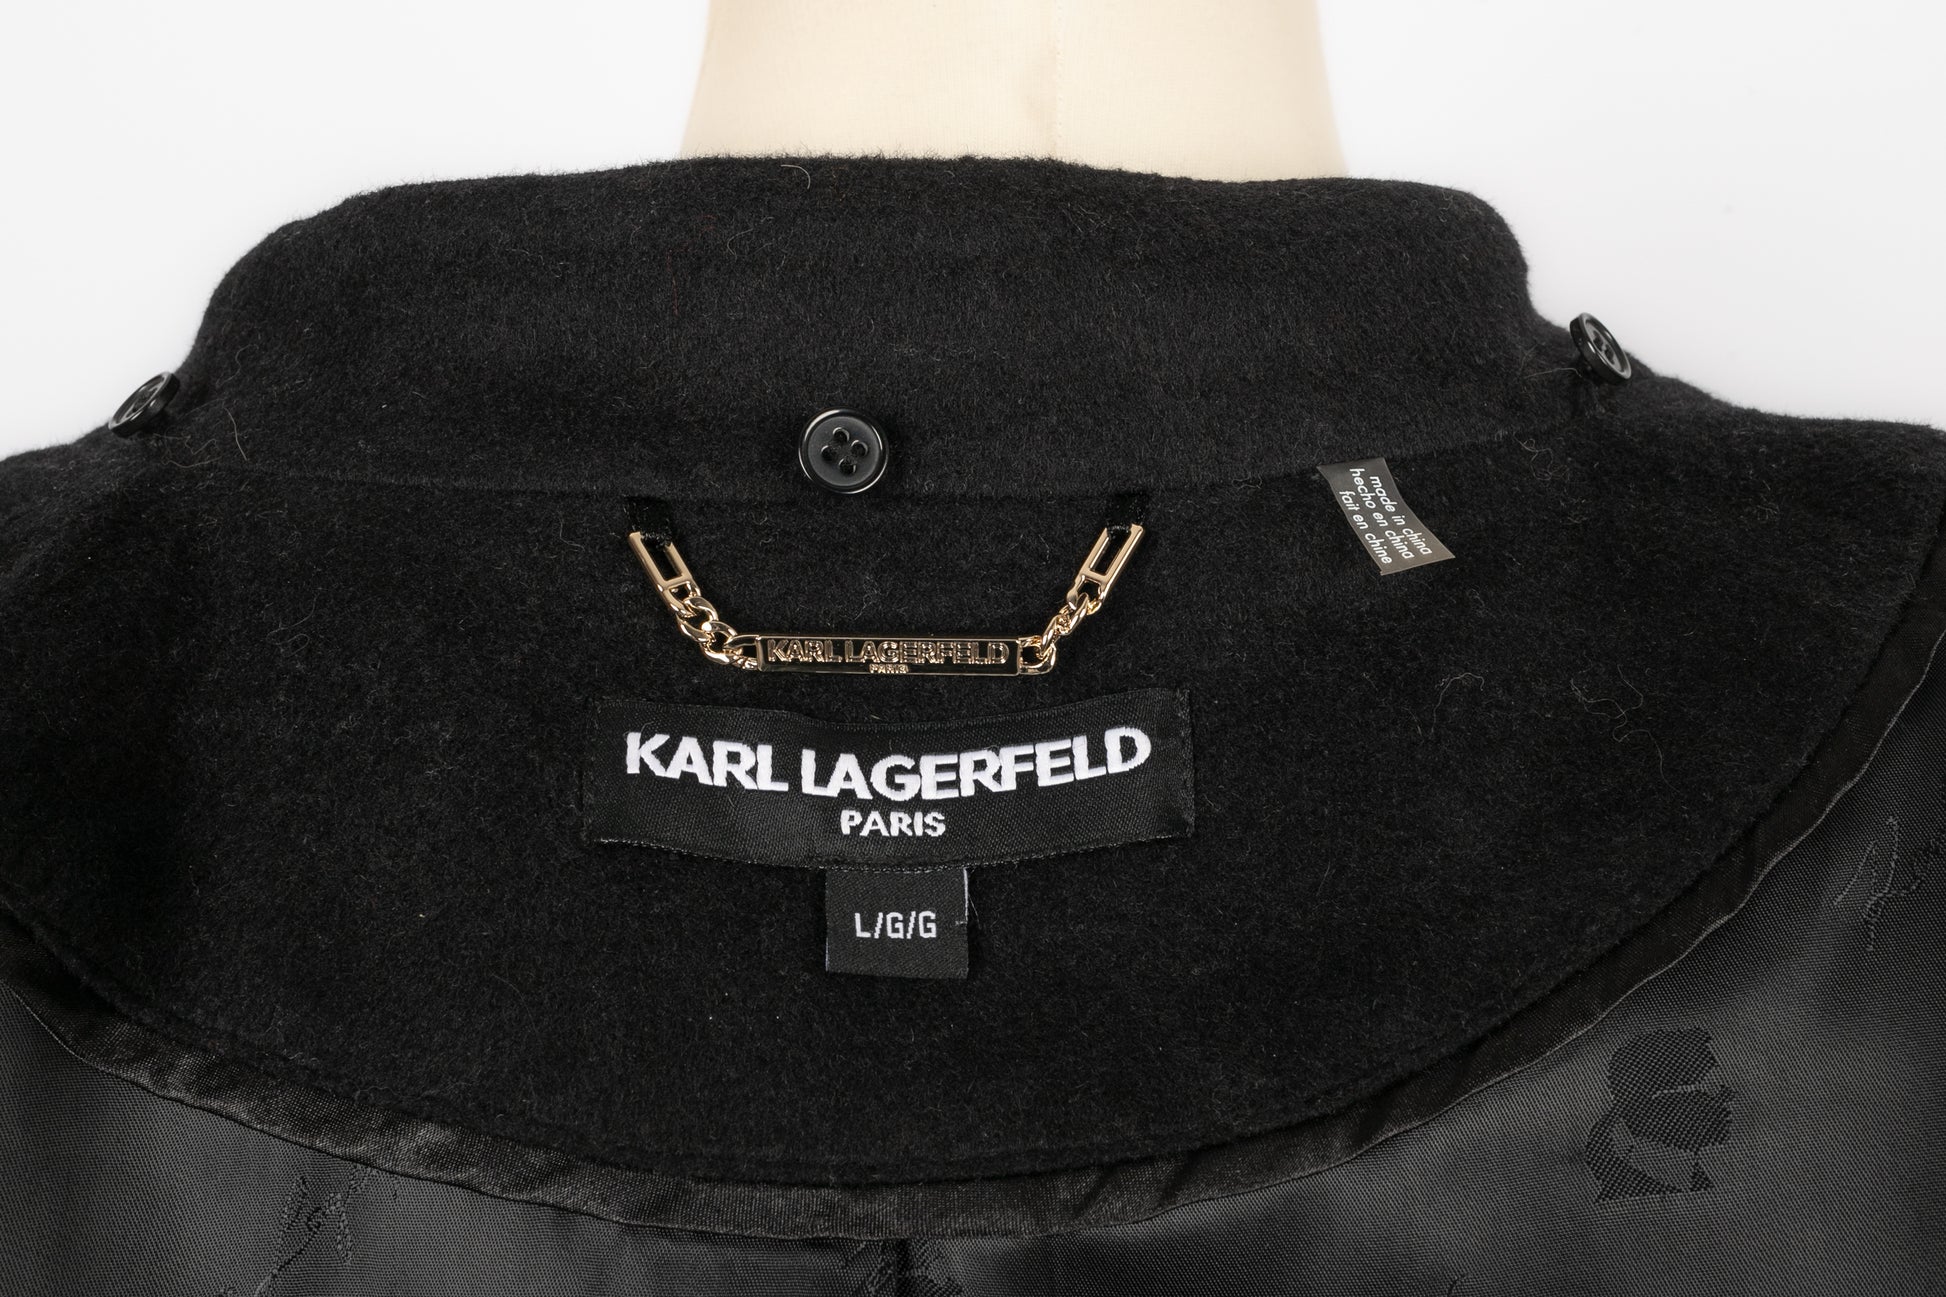 Veste Karl Lagerfeld